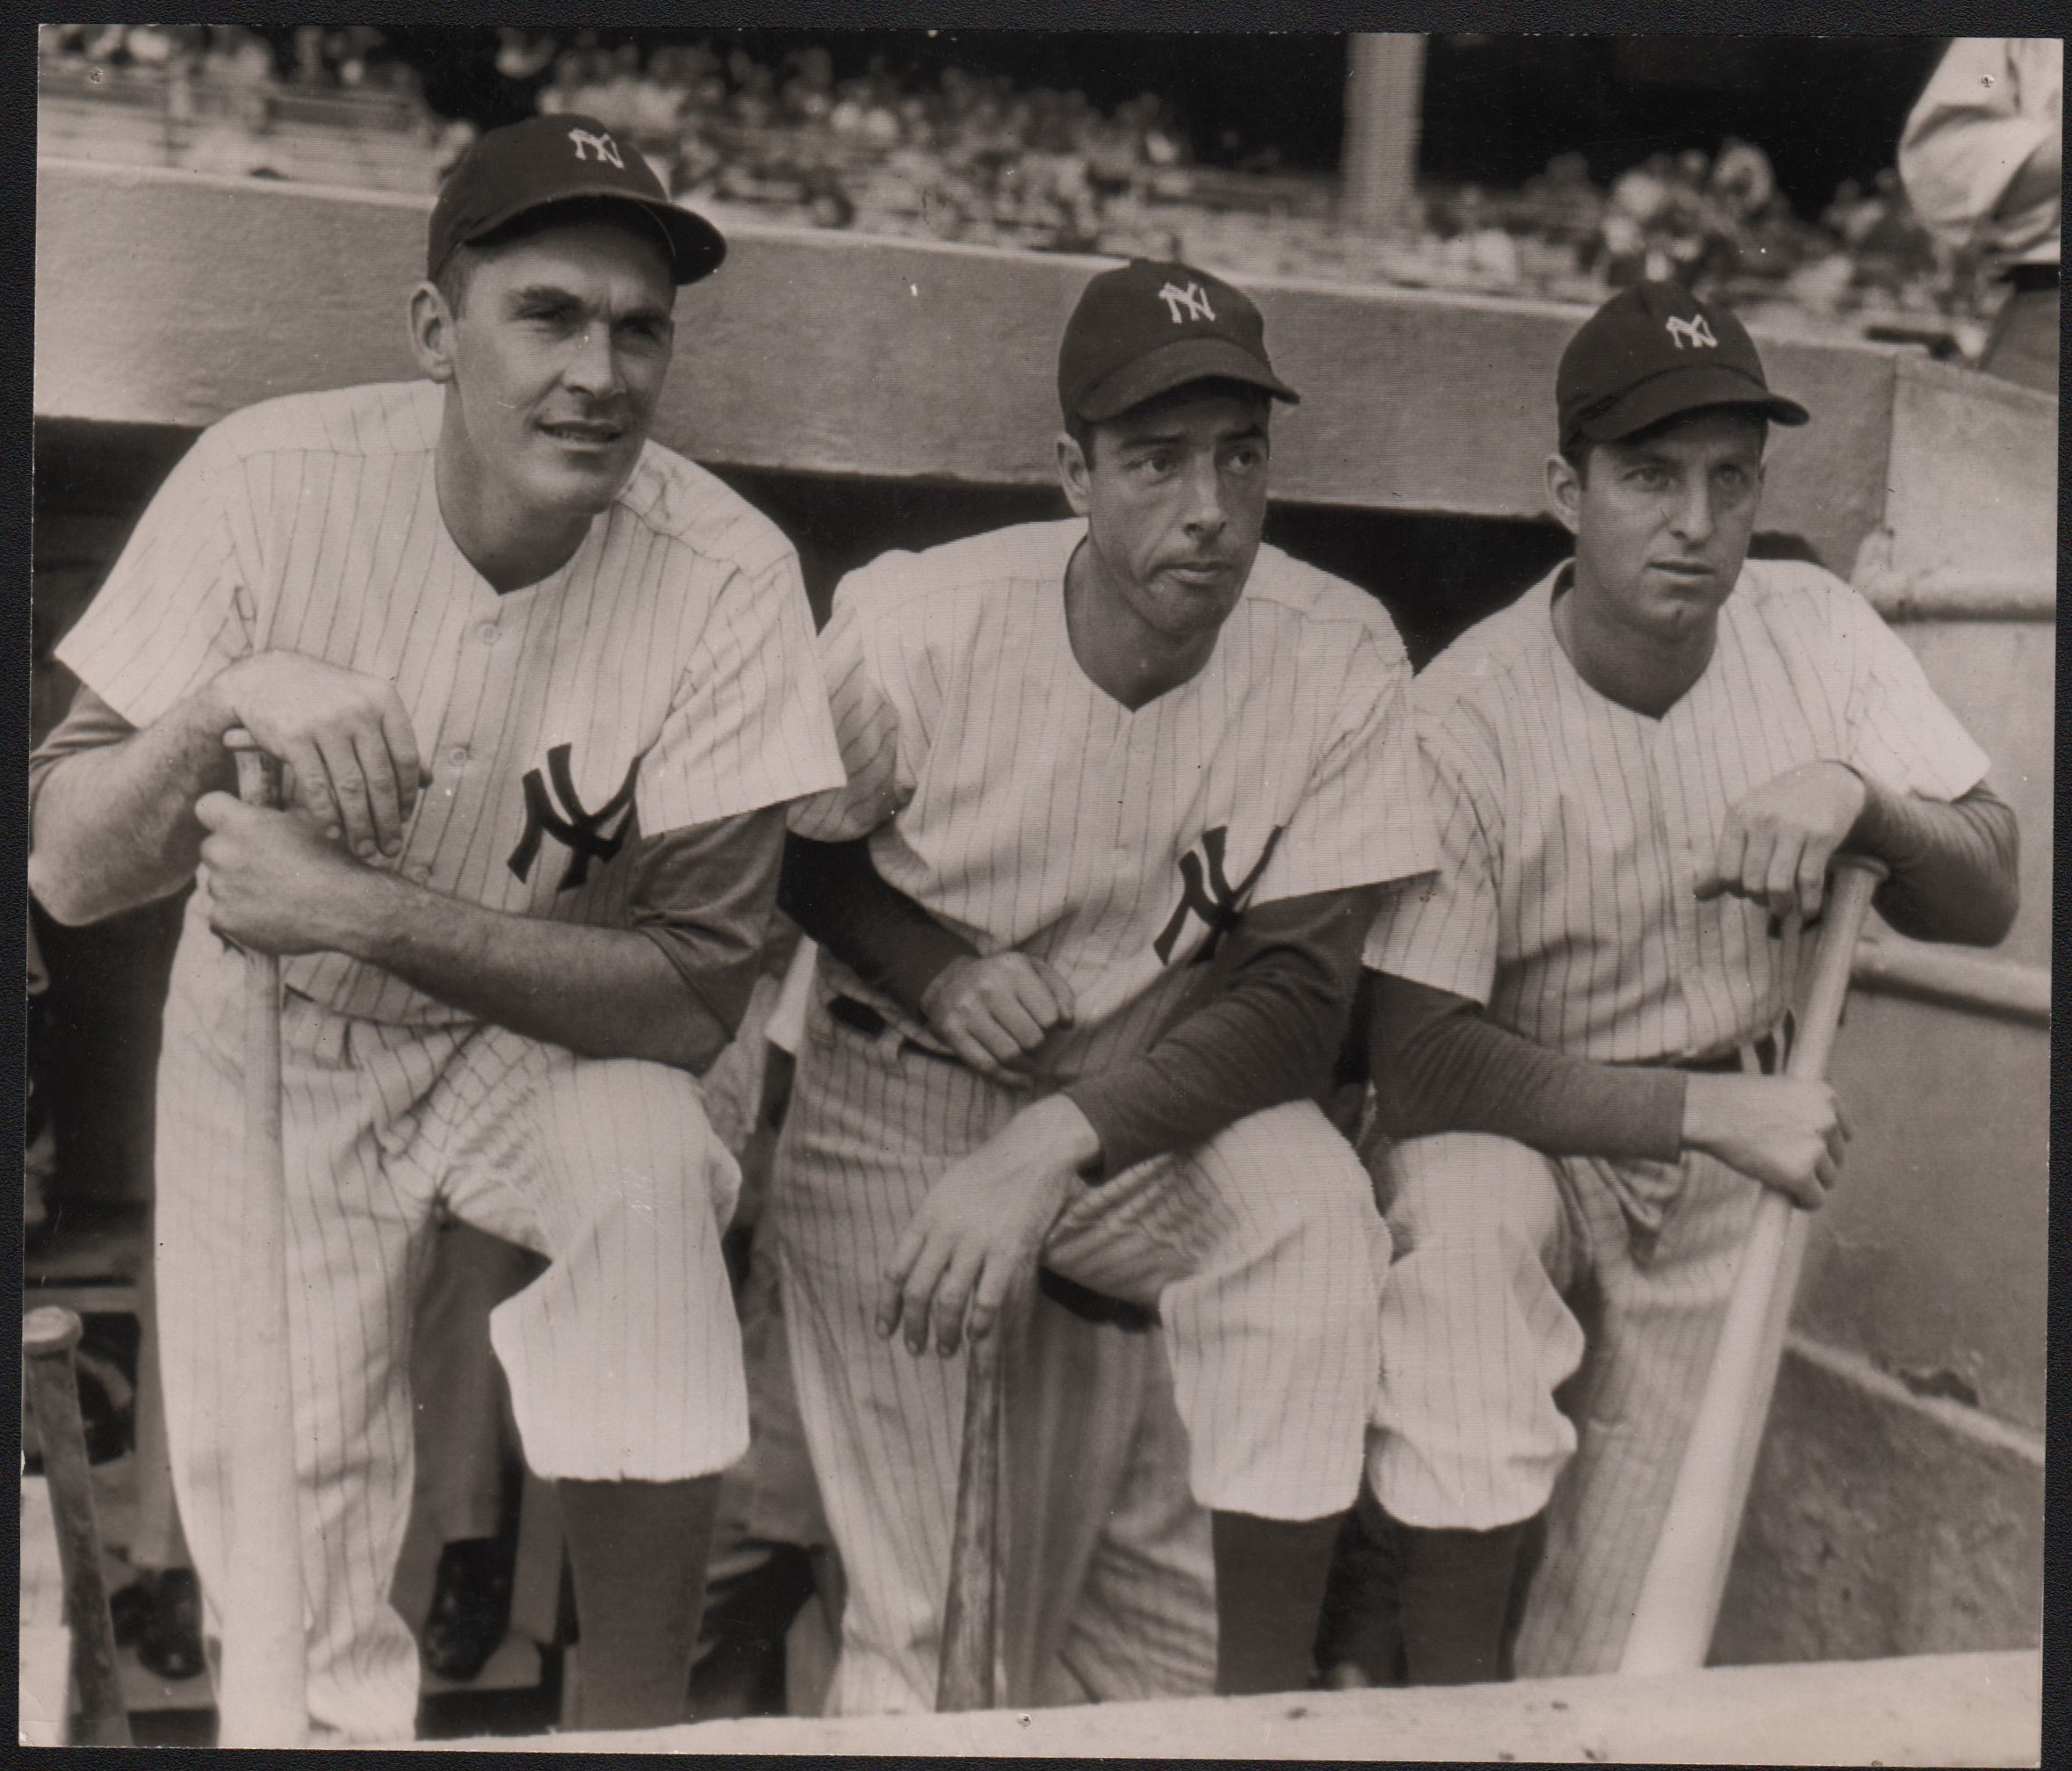 Vintage Sports Photographs - 1940s Joe DiMaggio & Mates Type I Photograph